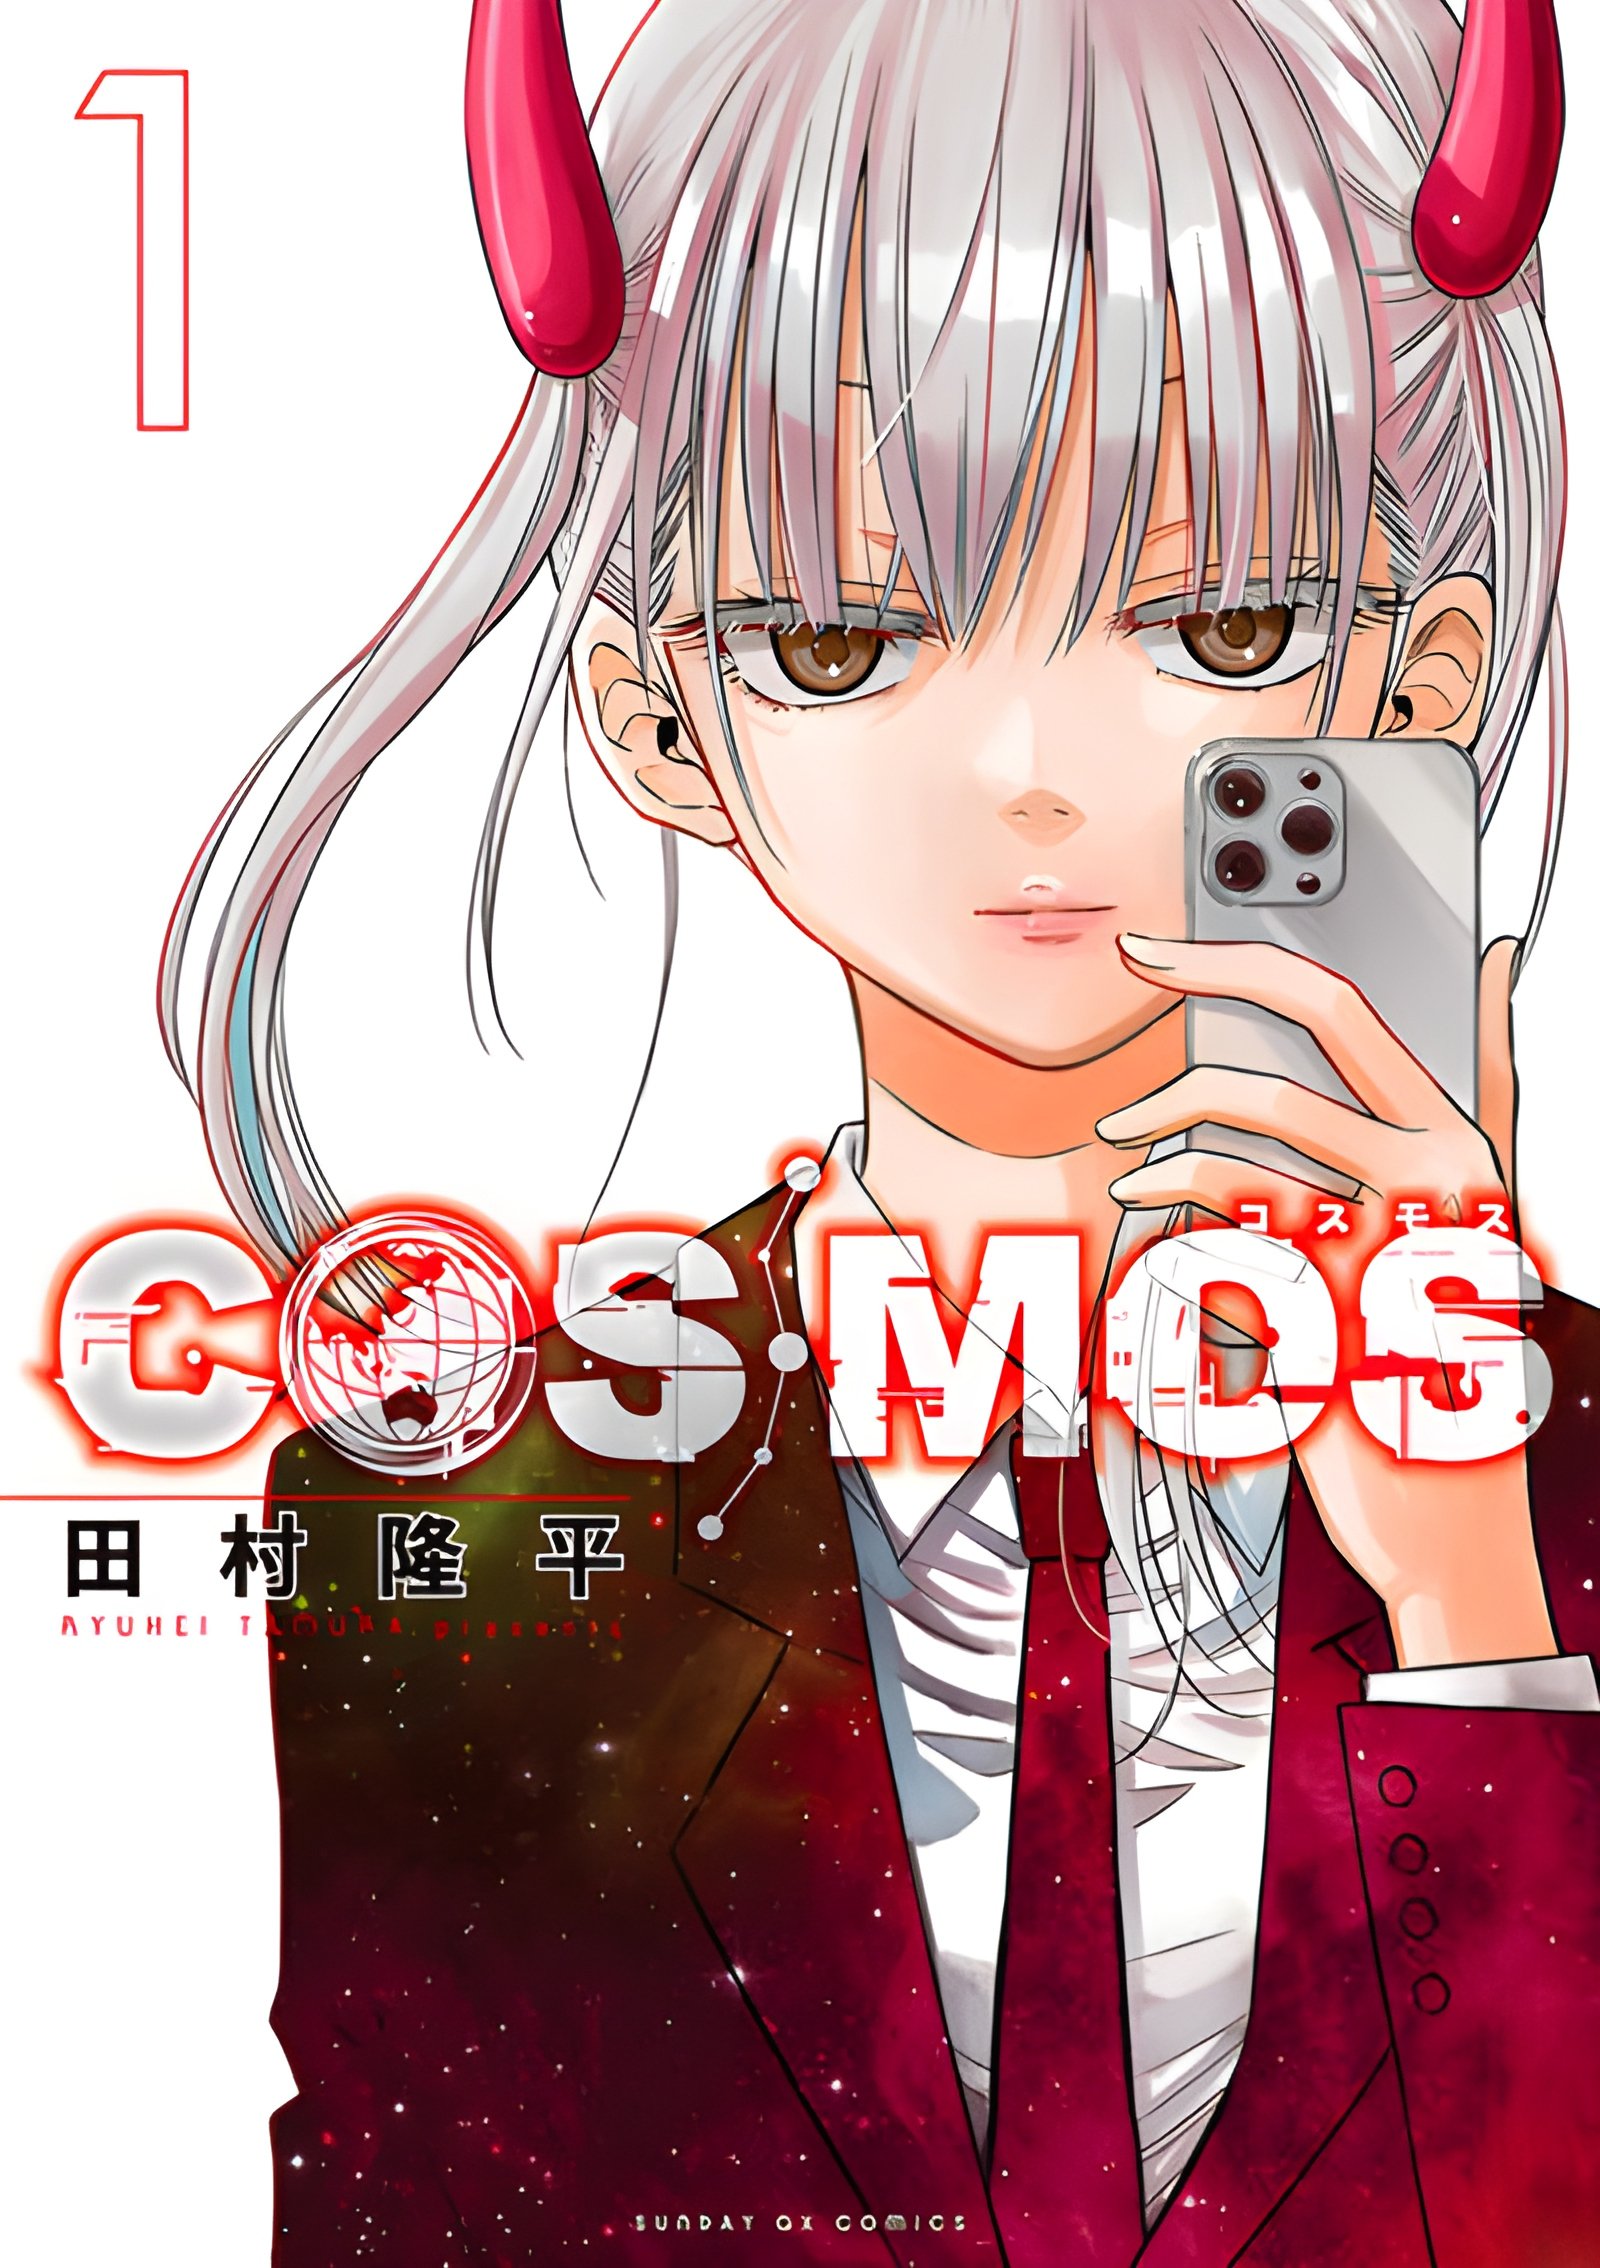 ART] Kimi wa Houkago Insomnia - Volume 14 Cover (Final) : r/manga